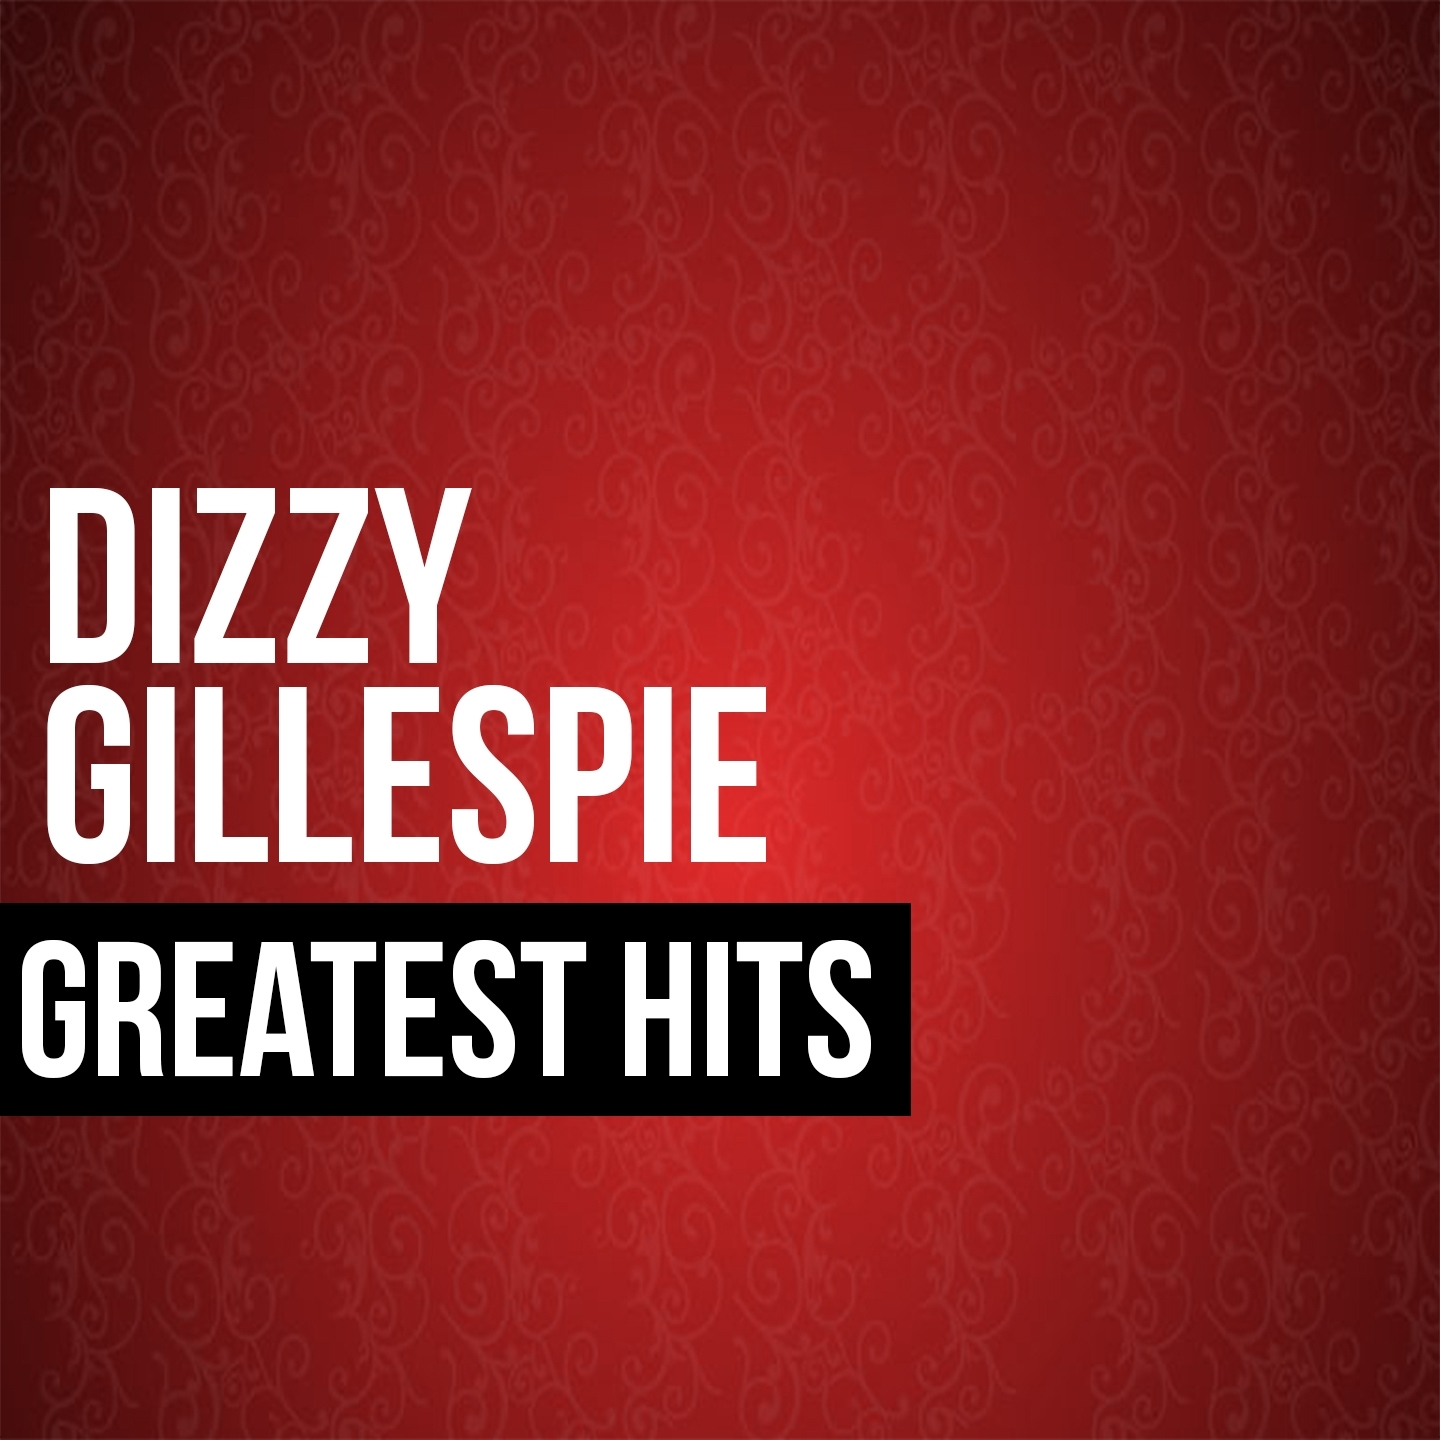 Dizzy Gillespie Greatest Hits